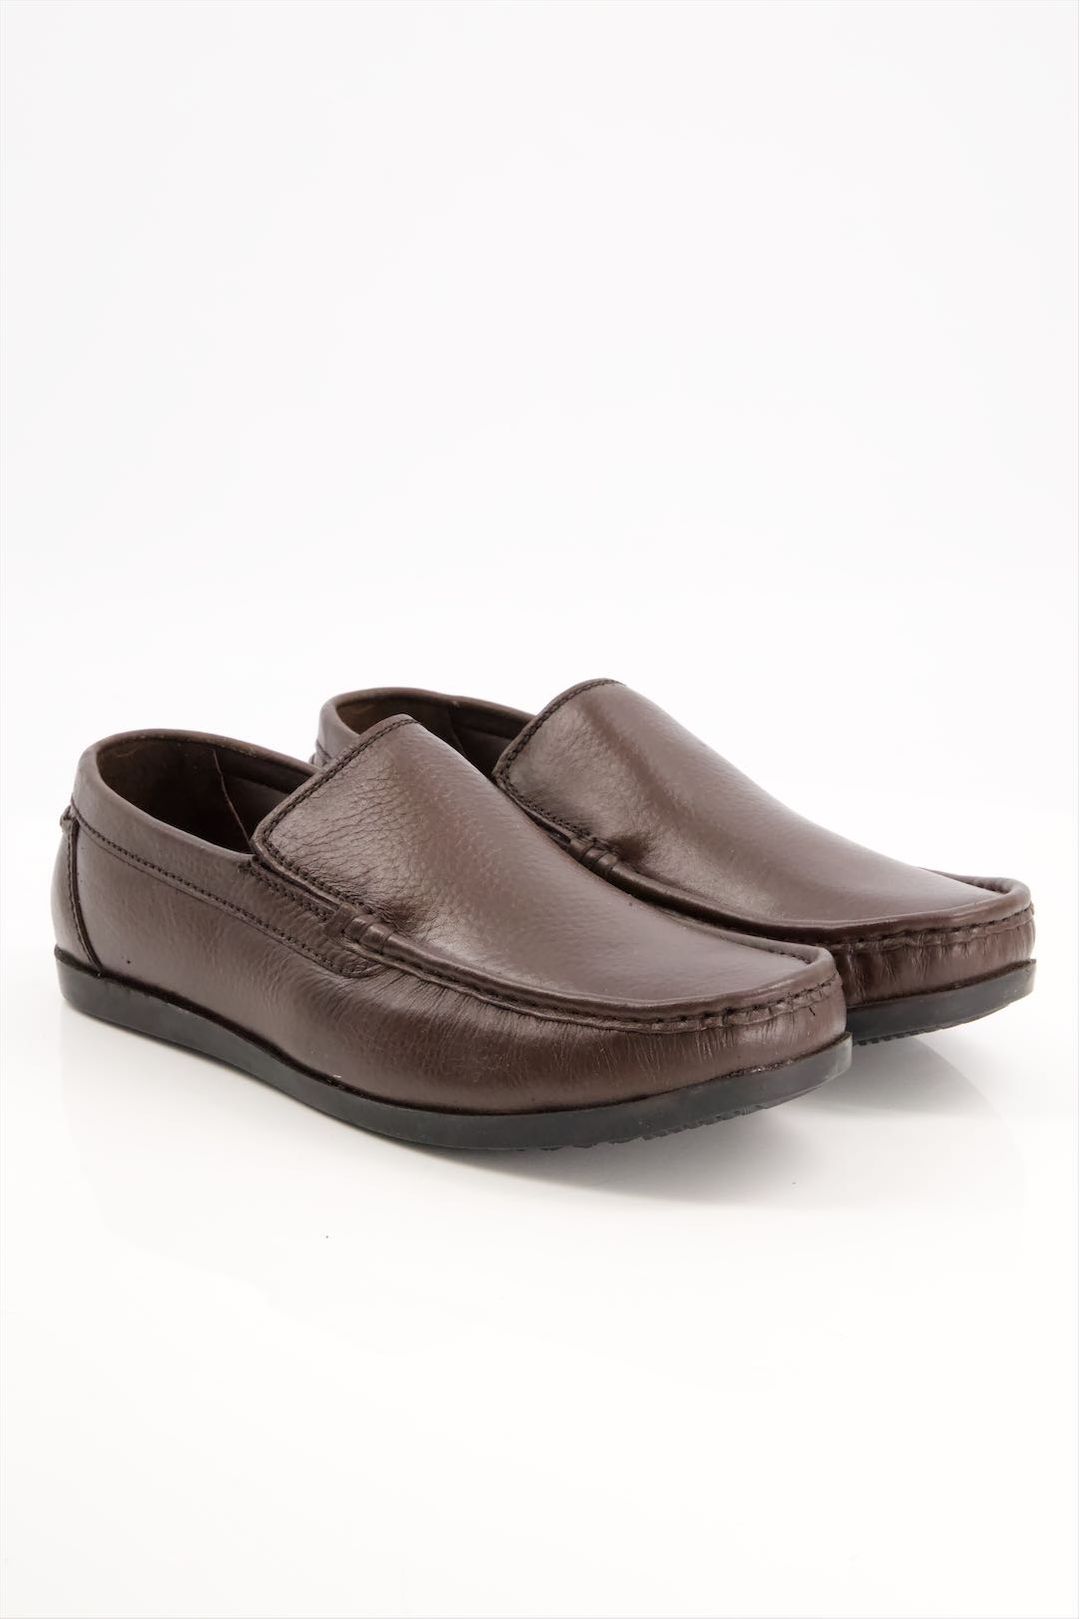 Men Premium Leather Brown Formal Shoes